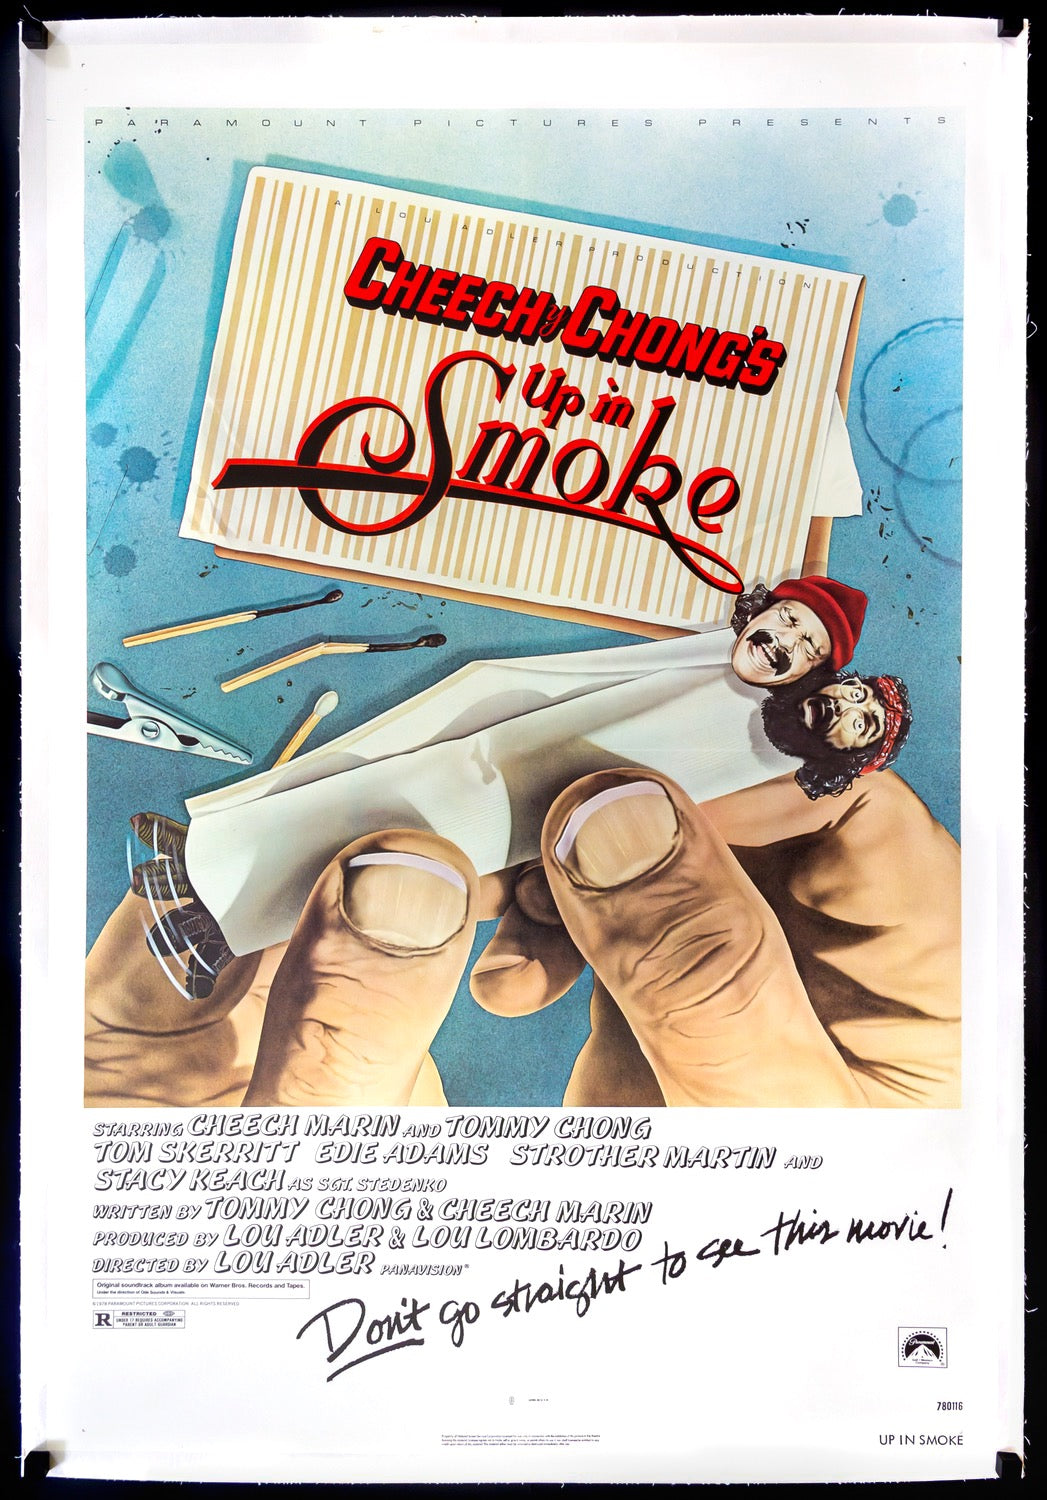 Up in Smoke (1978) original movie poster for sale at Original Film Art